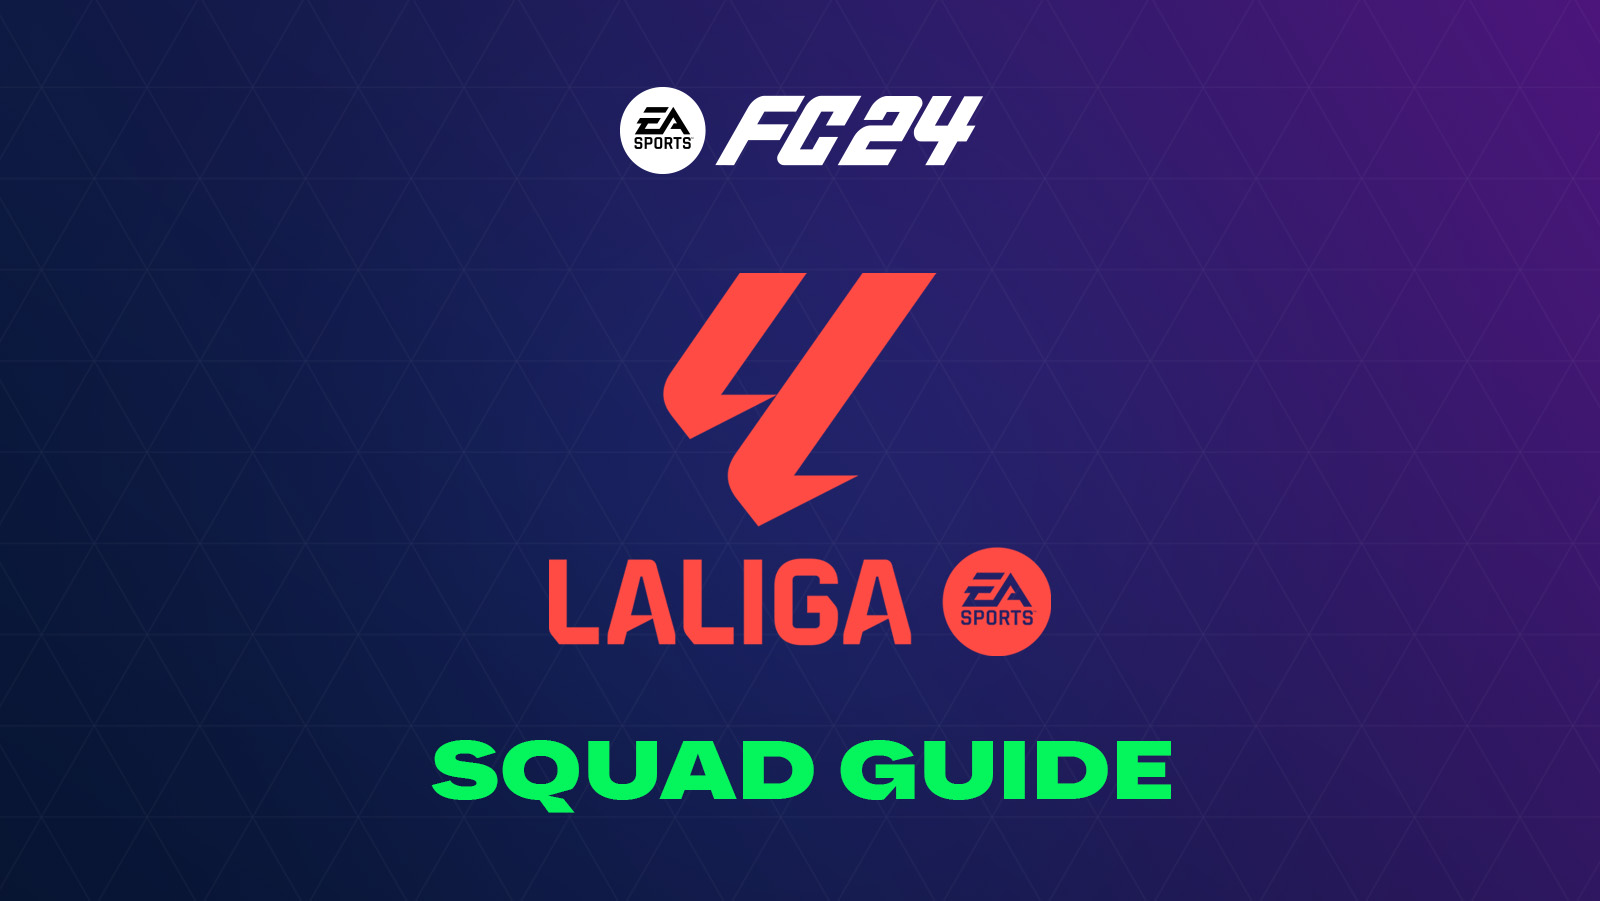 FC 24 LaLiga Squad Guide